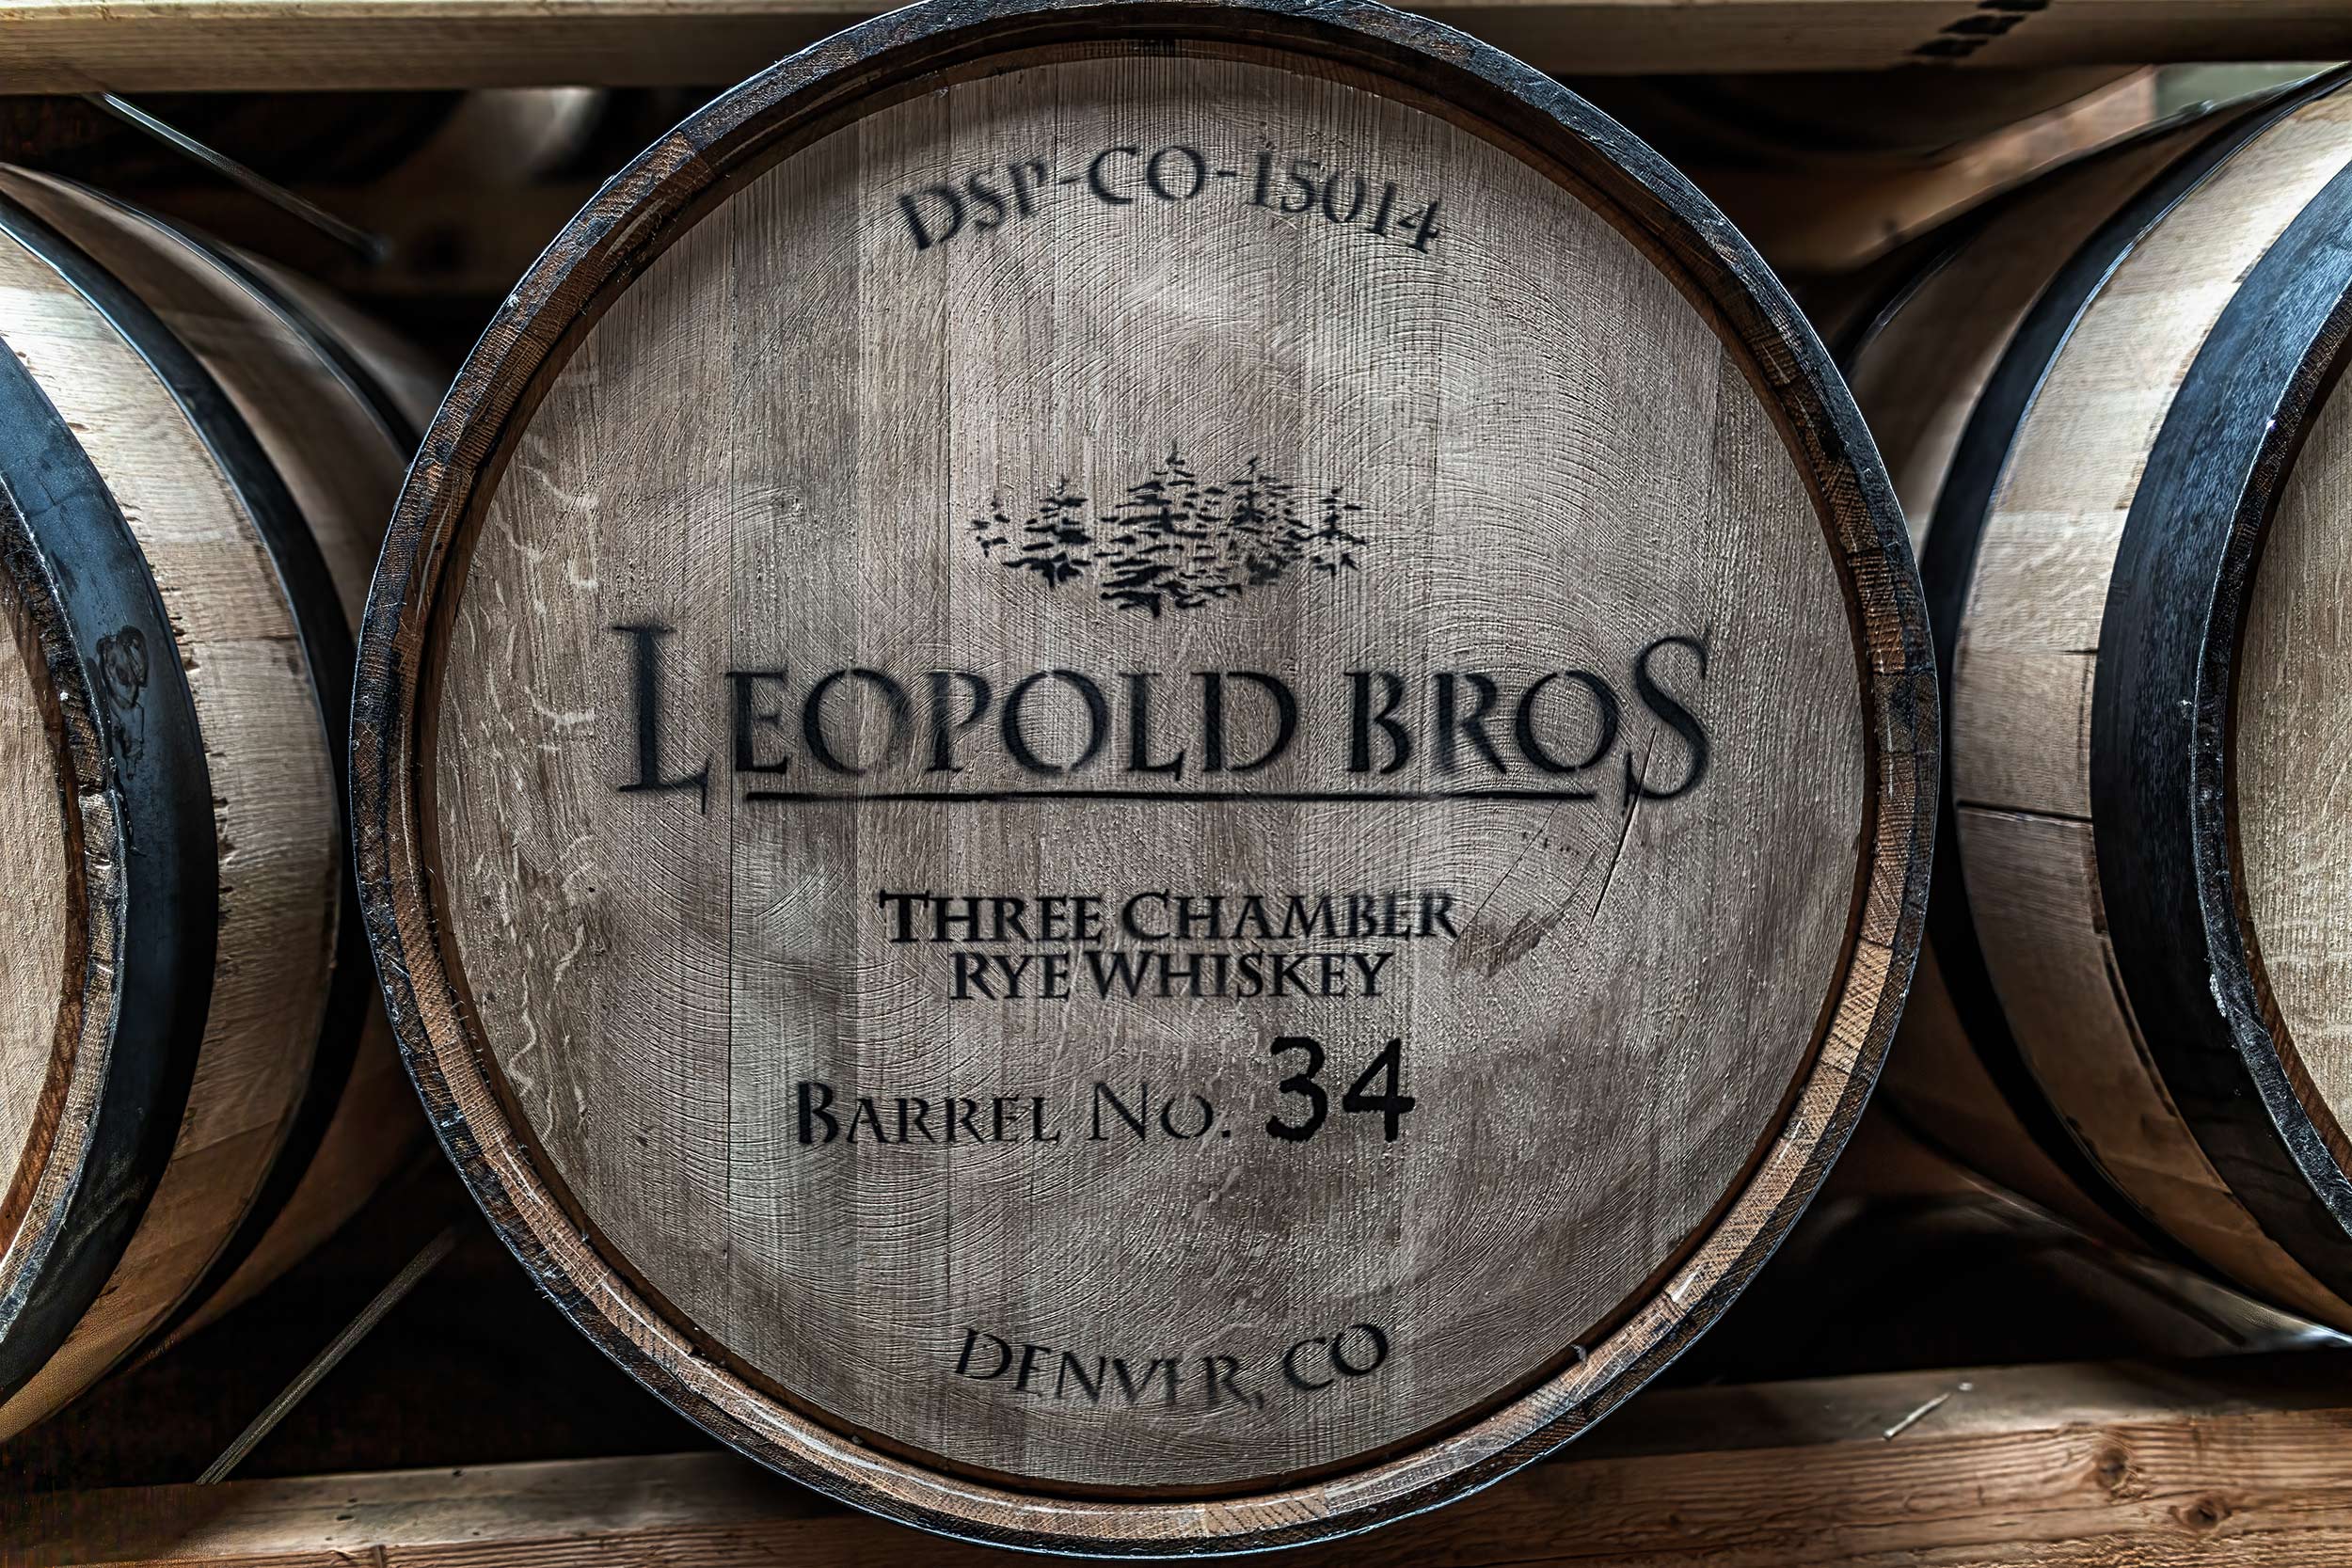 Master Distiller, Distilling Hand-crafted whiskey.